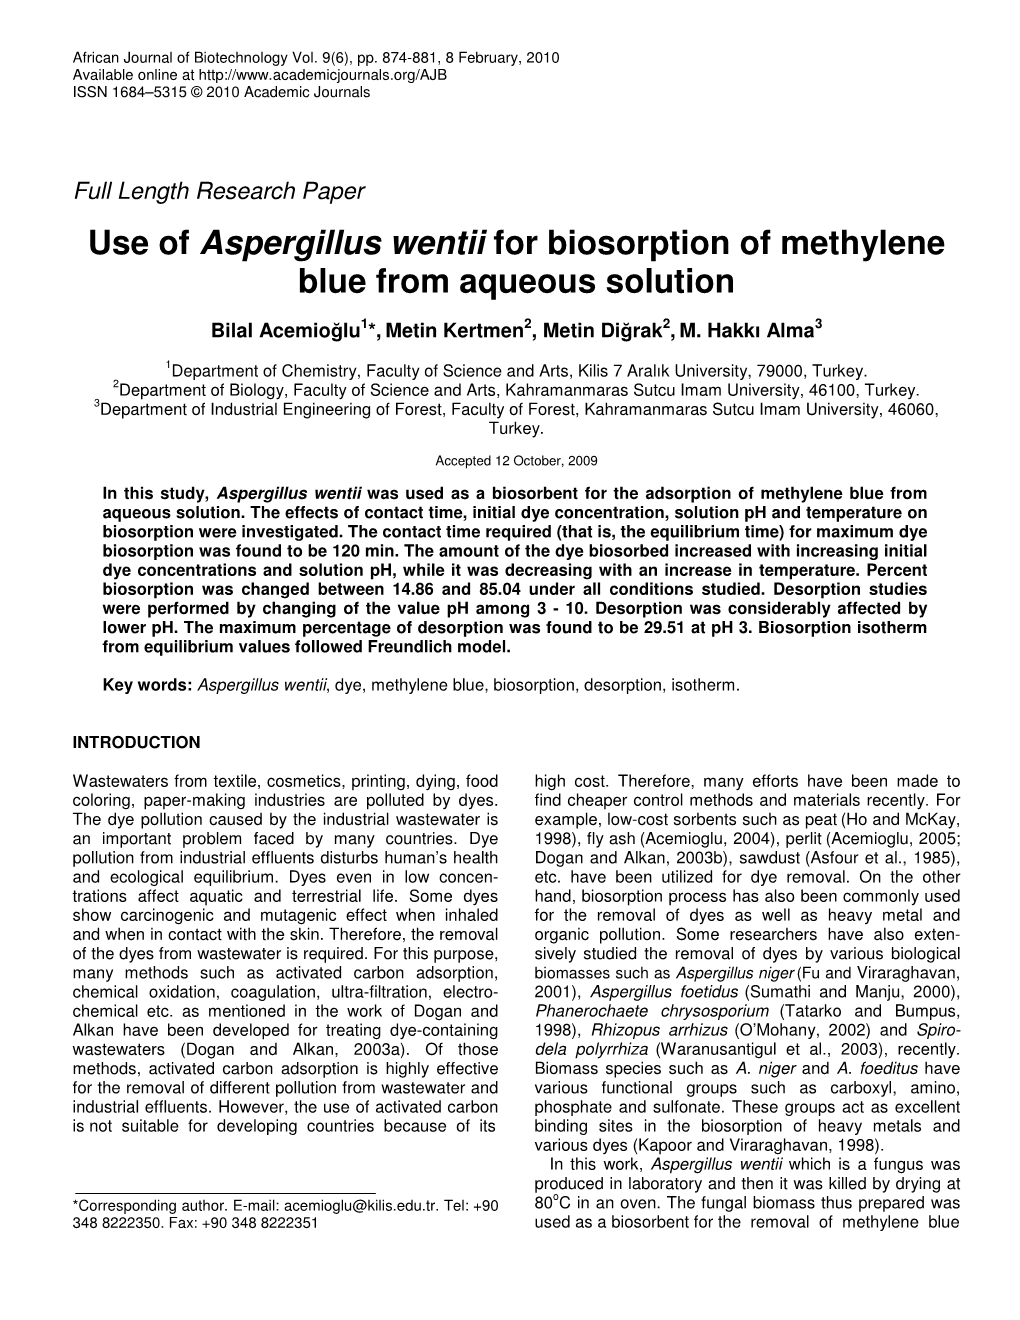 Use of Aspergillus Wentii for Biosorption of Methylene Blue from Aqueous Solution